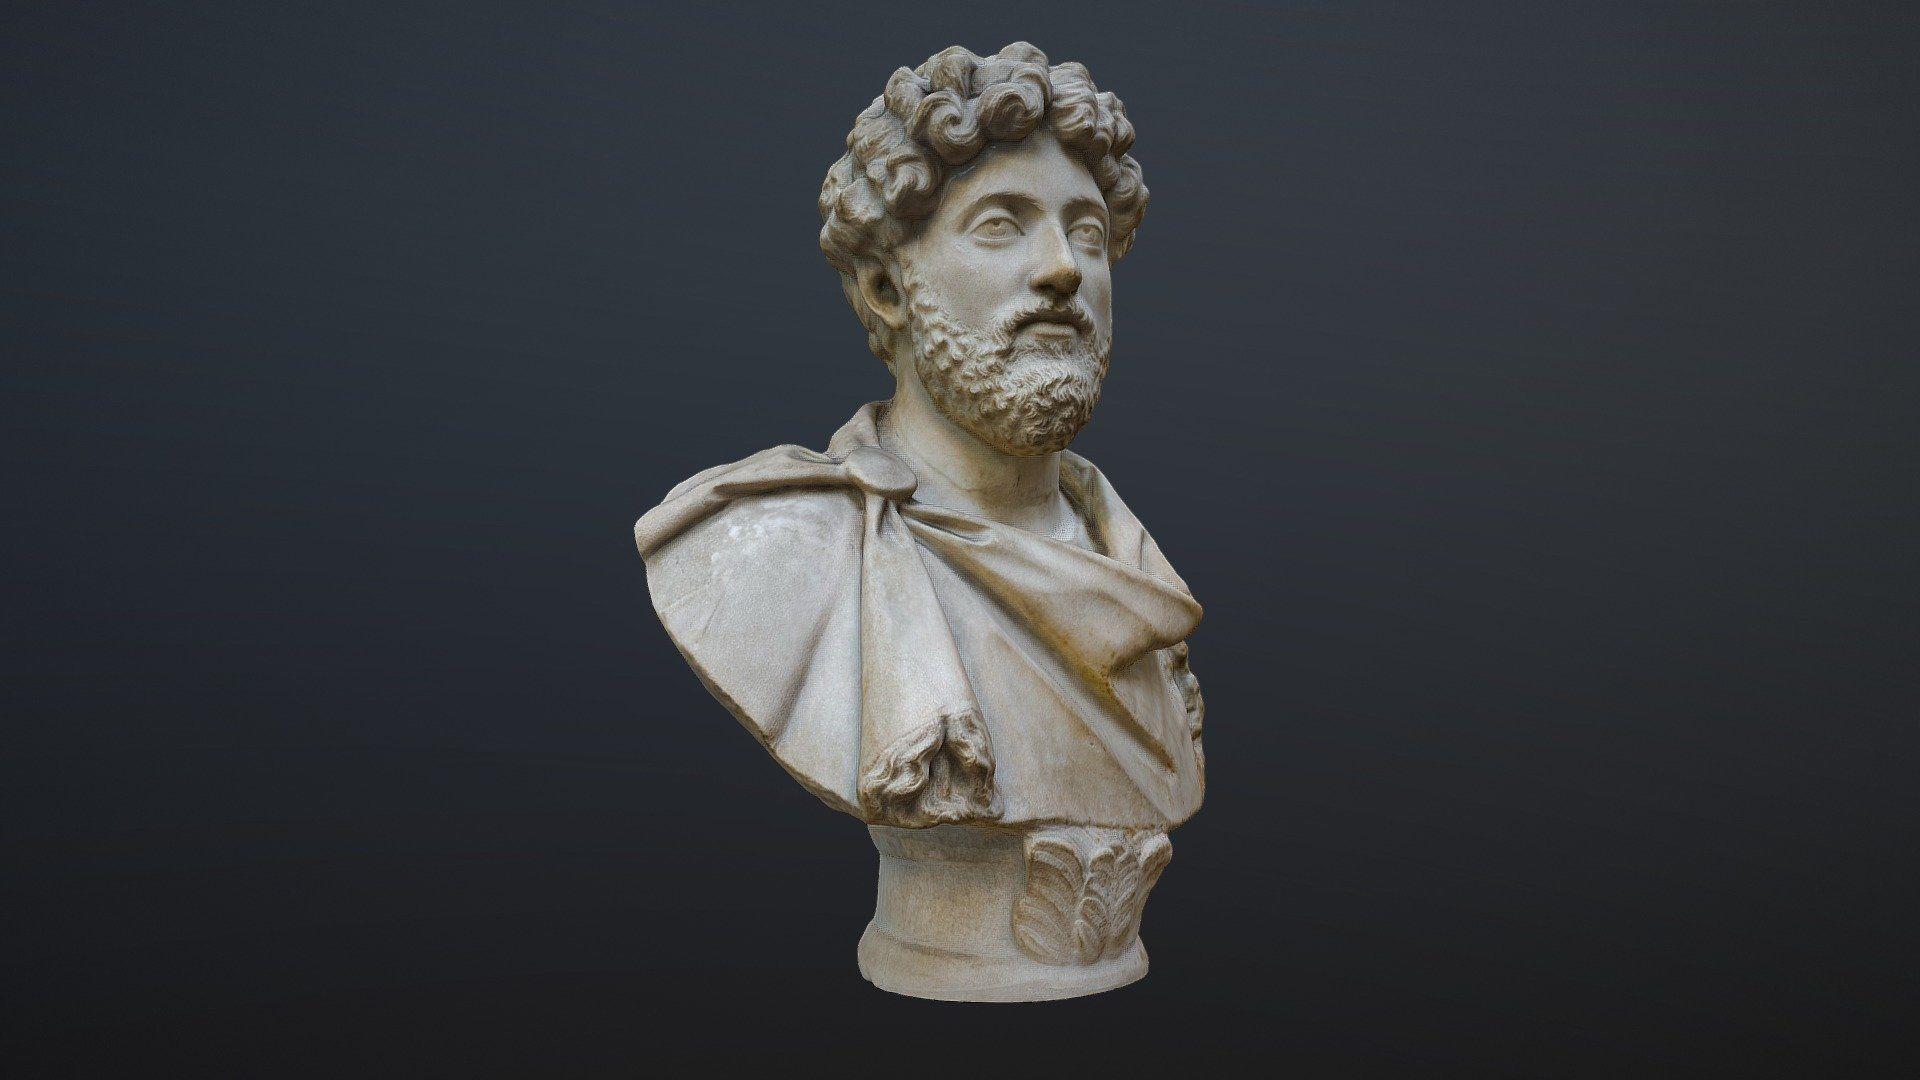 Marcus Aurelius Desktop Wallpapers - Top Free Marcus Aurelius Desktop